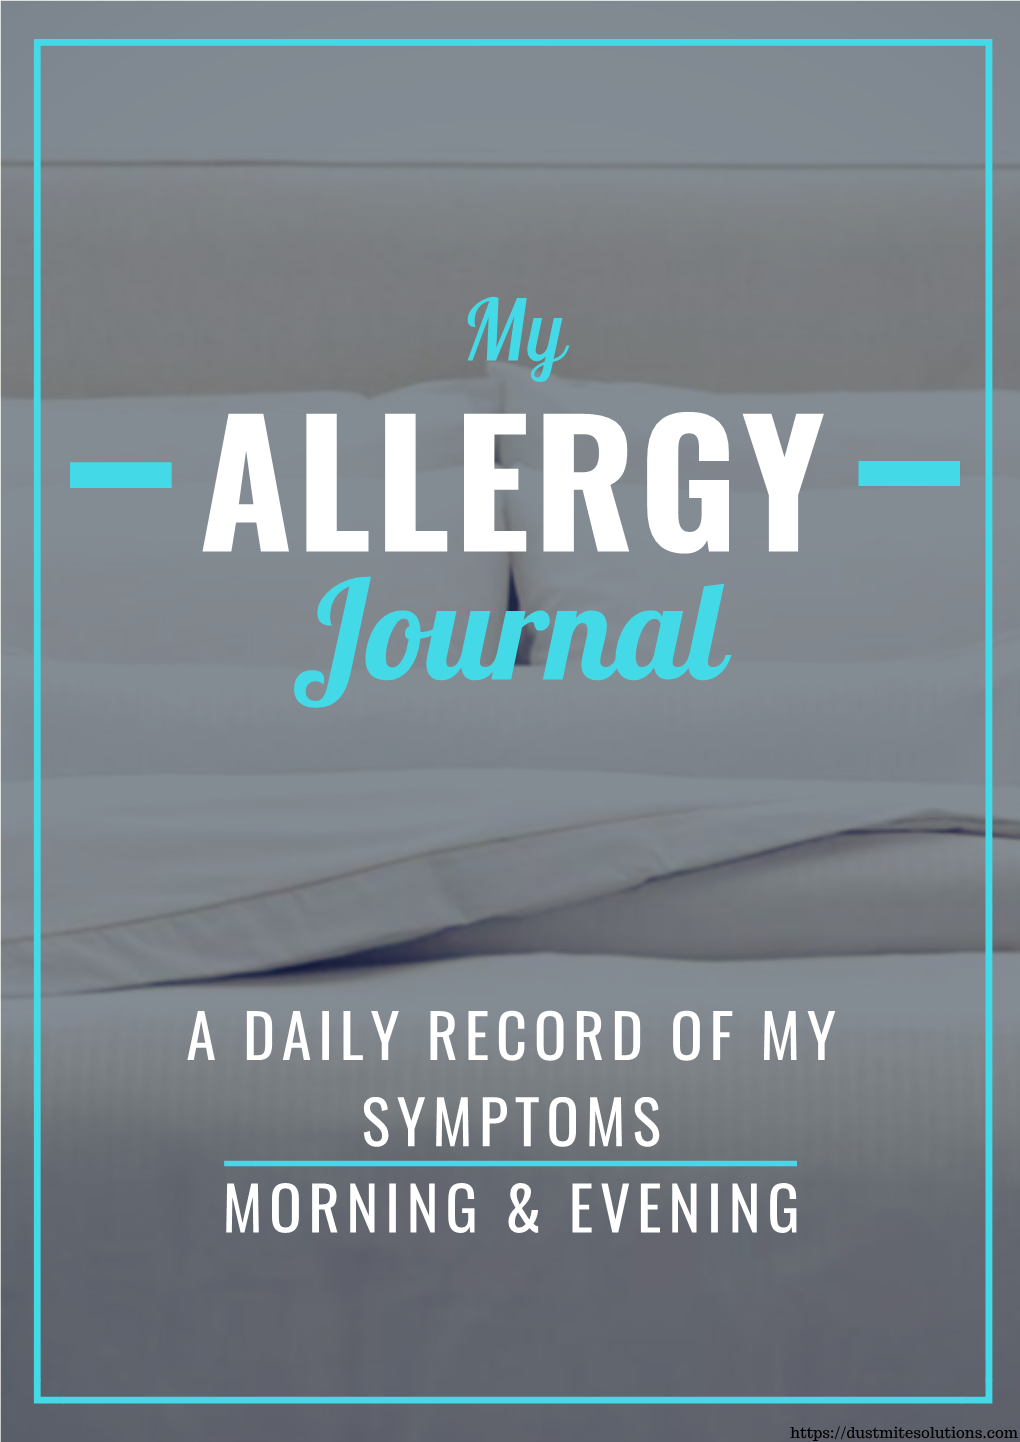 My ALLERGY Journal